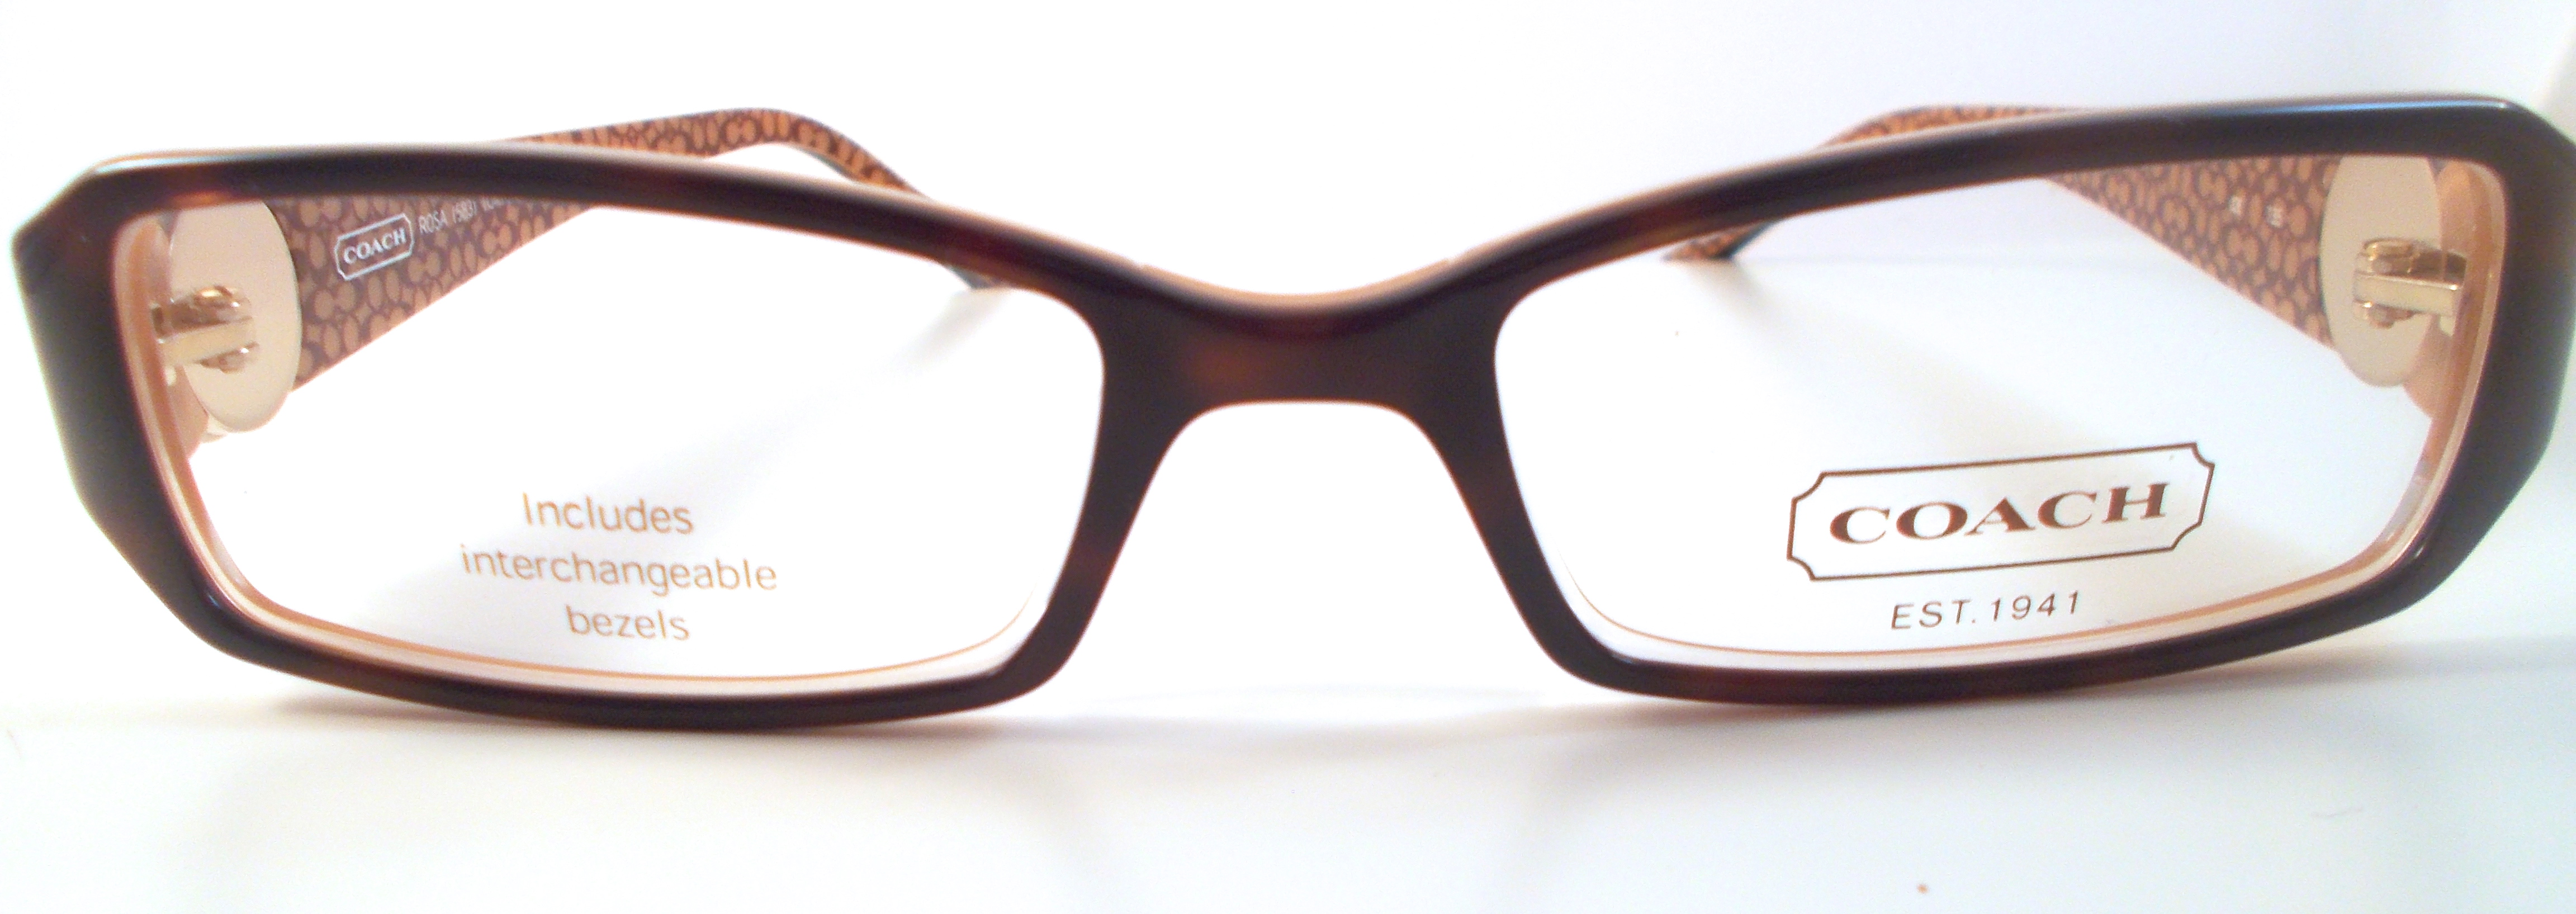 coach glasses frames的圖片搜尋結果